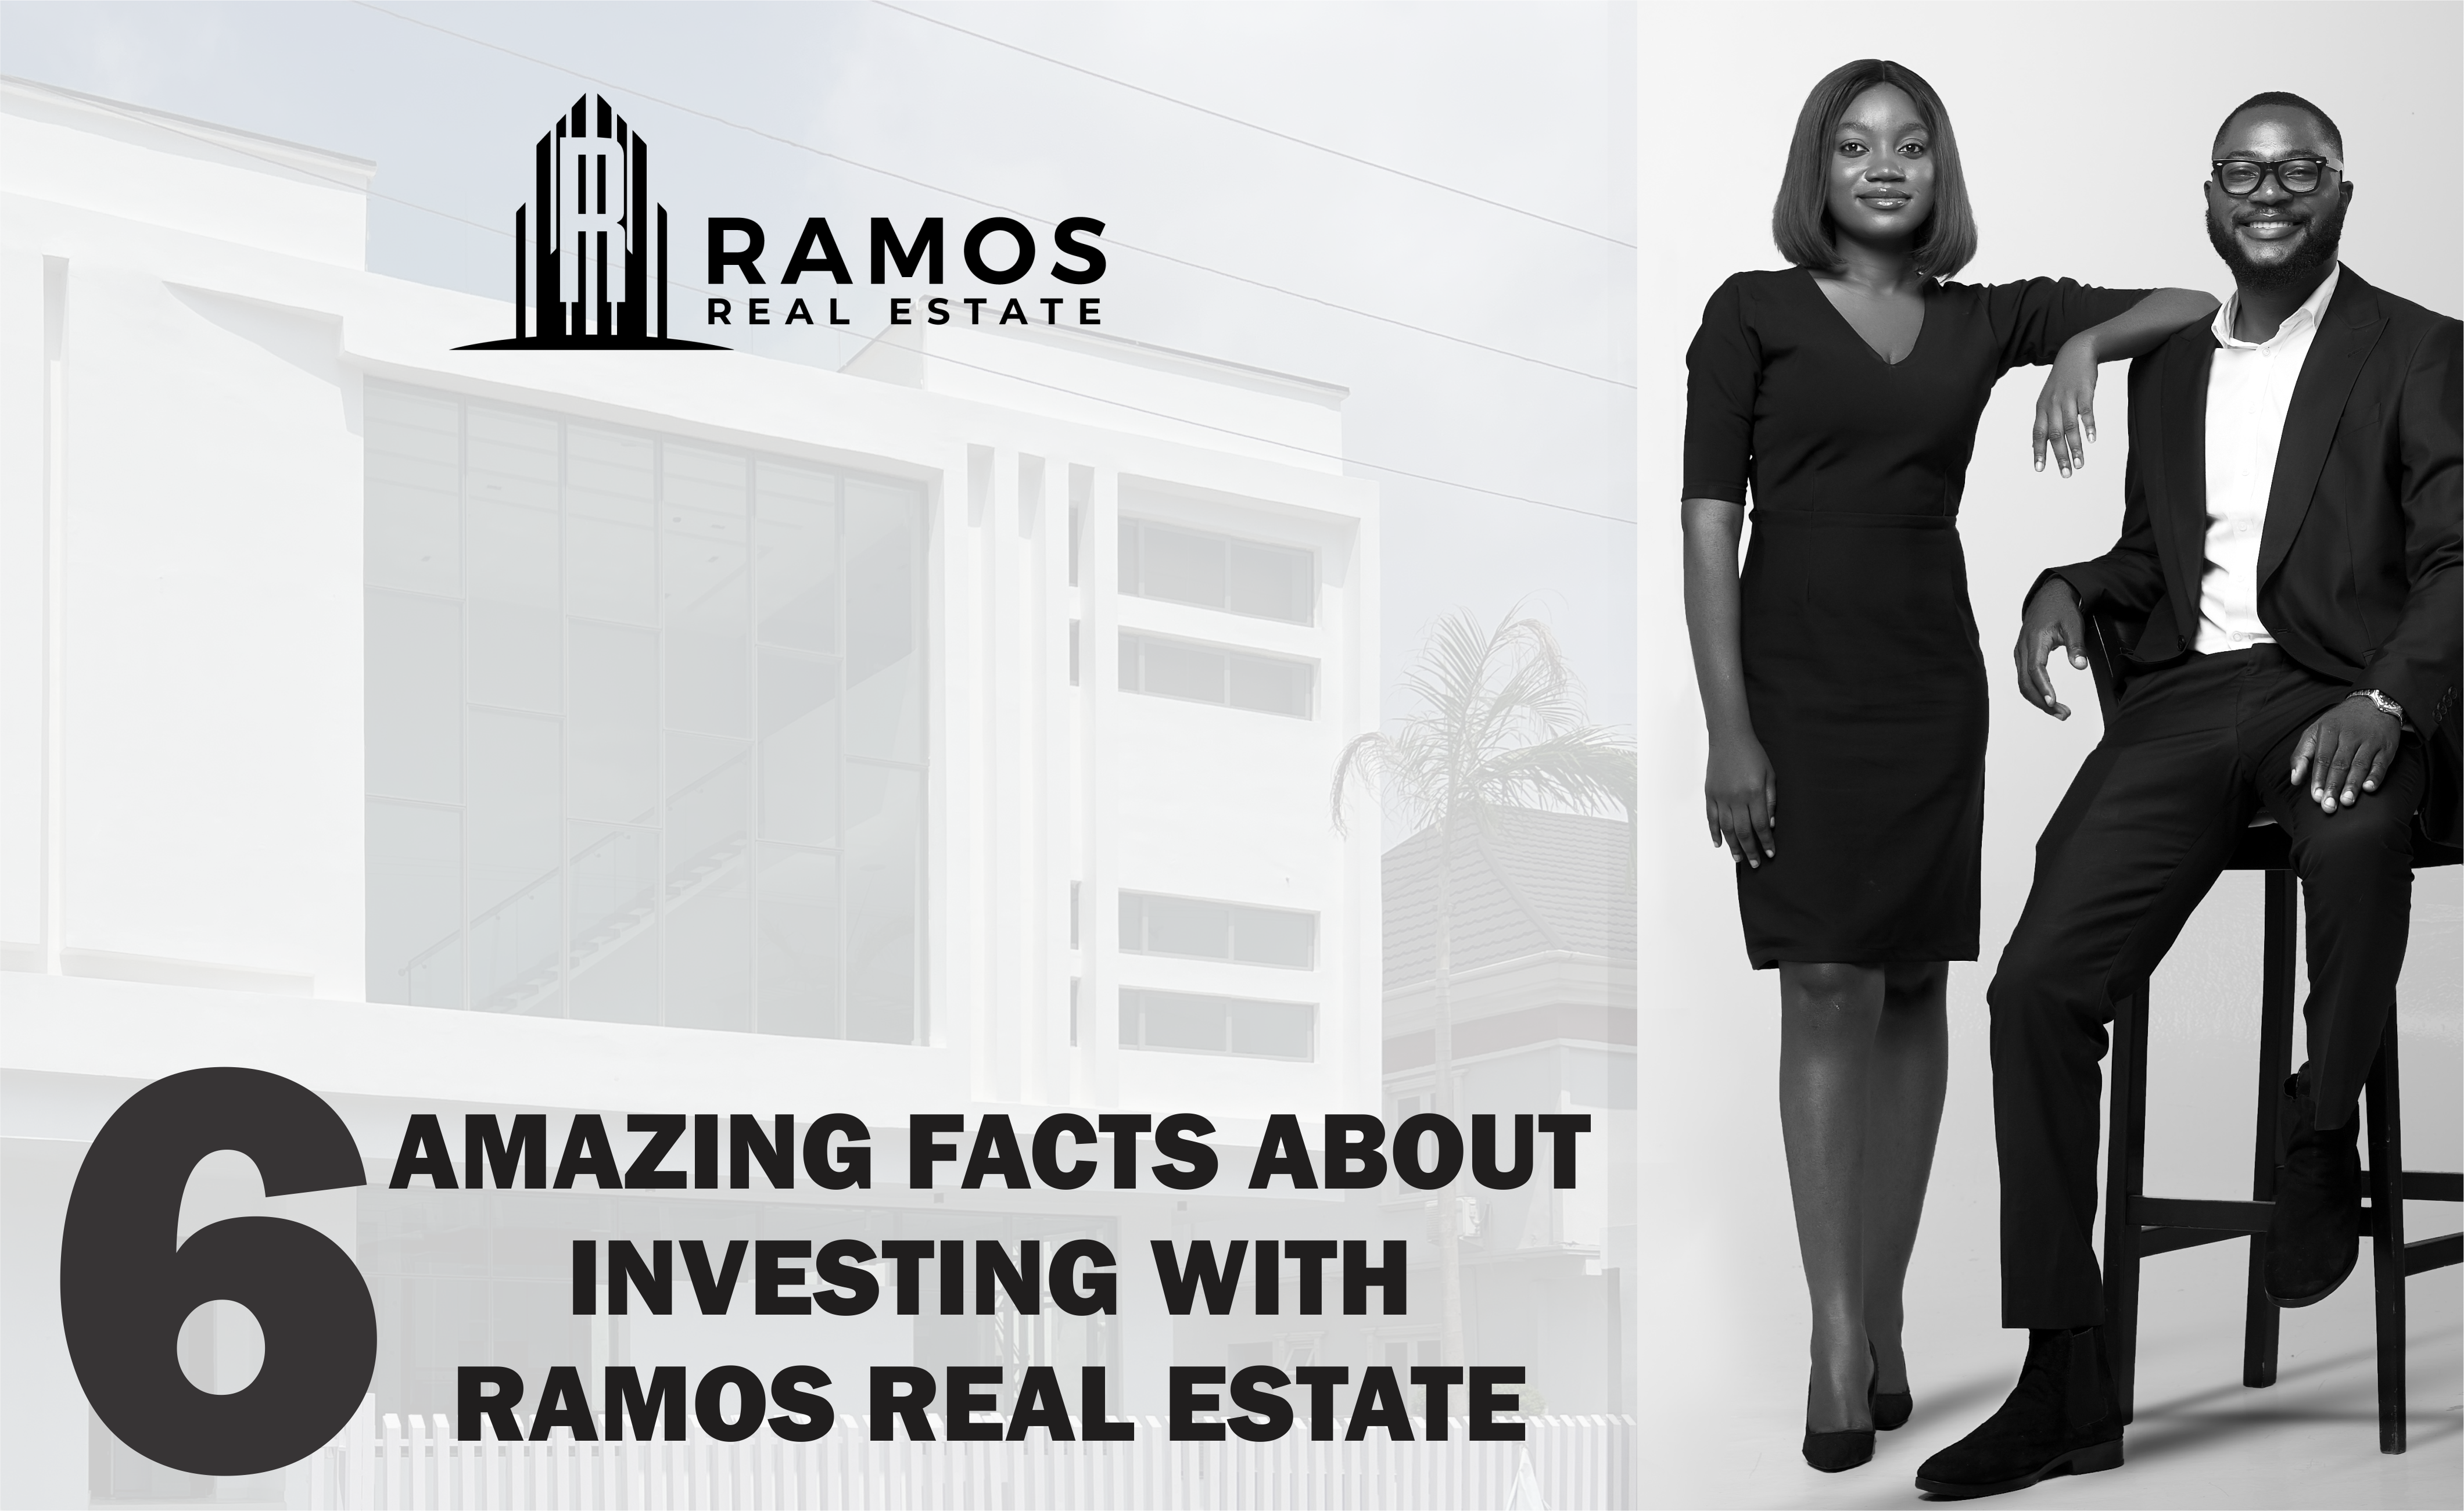 Ramos Real Estate